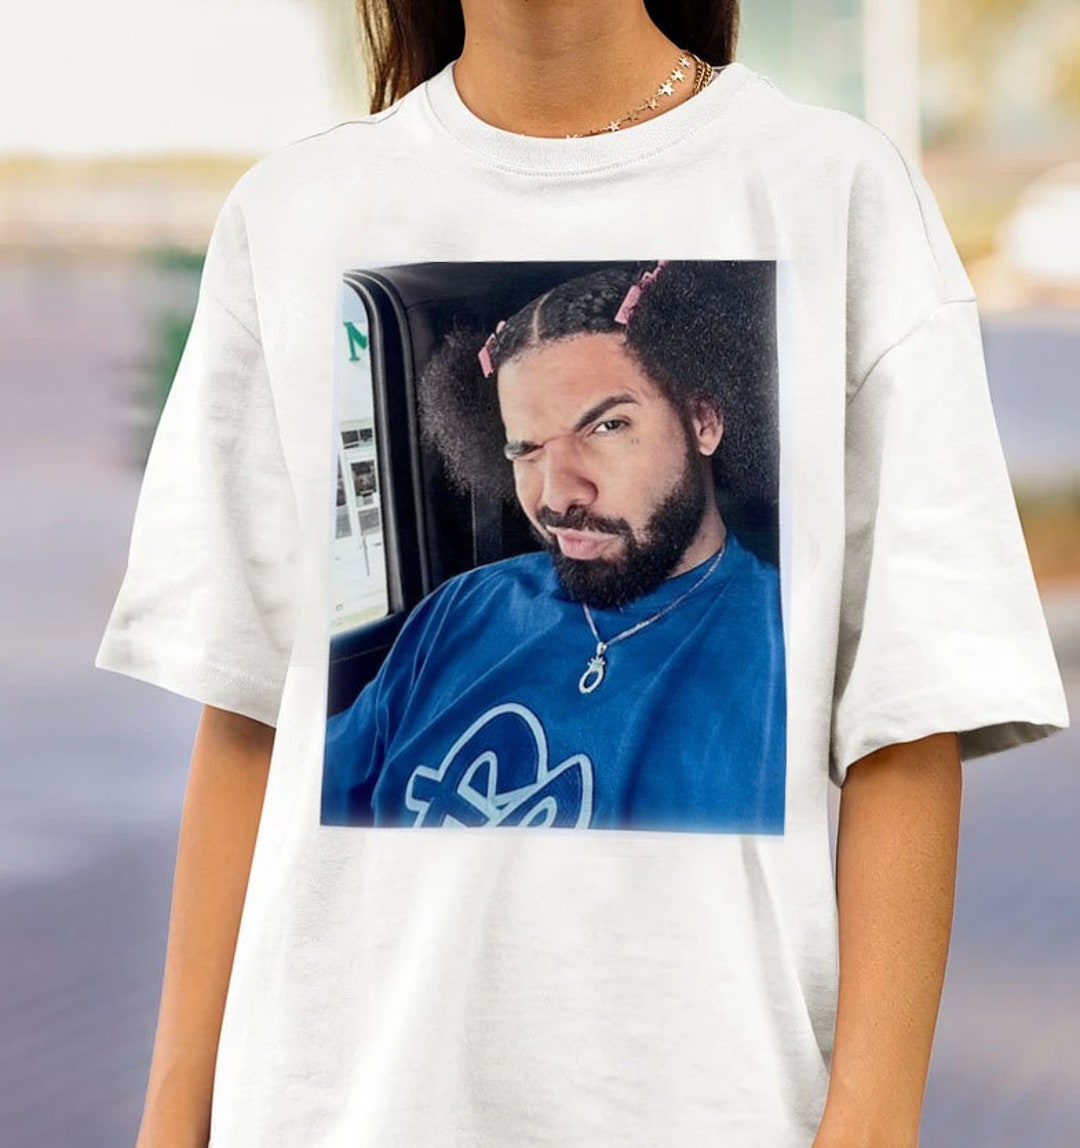 Drake Graphic Shirt, Rap Tee Concert Merch Champagne Papi Shirt -  Trendingnowe